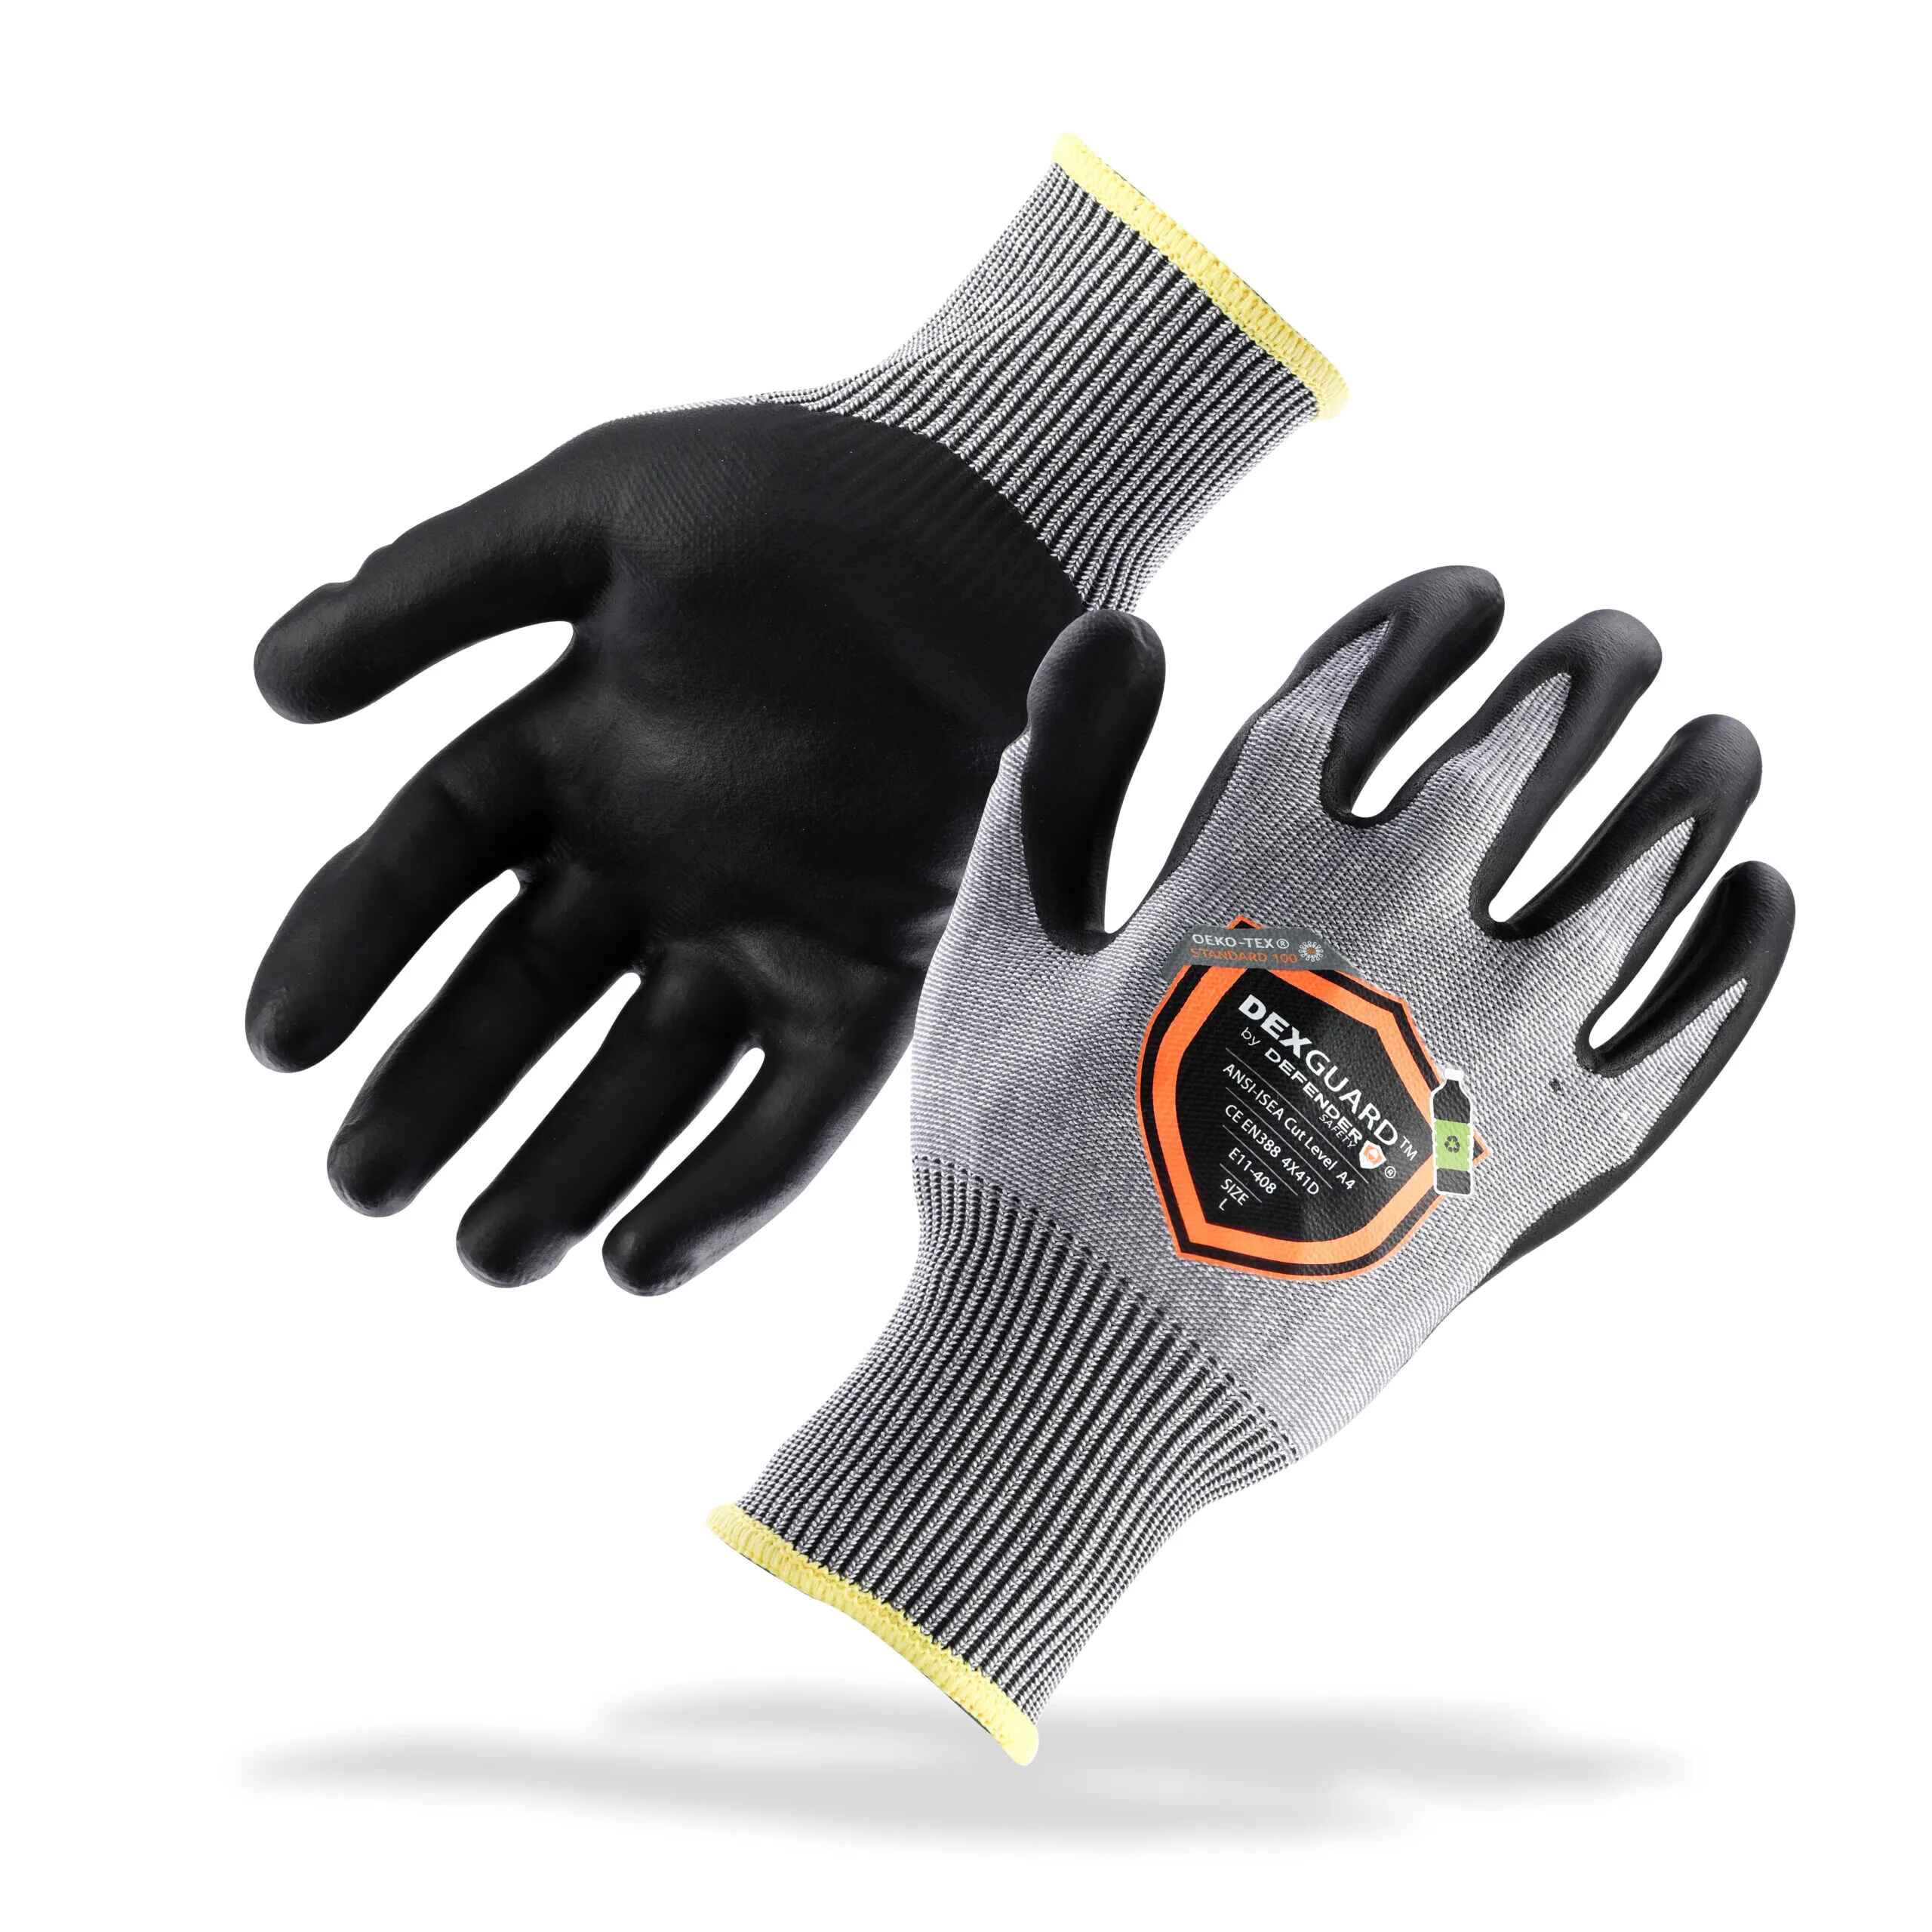 Dexguard A4 Cut Gloves, Level 4 Abrasion Resistant, Foam Nitrile Coating (Size: 2XL, Case/Box: 12 Pair)